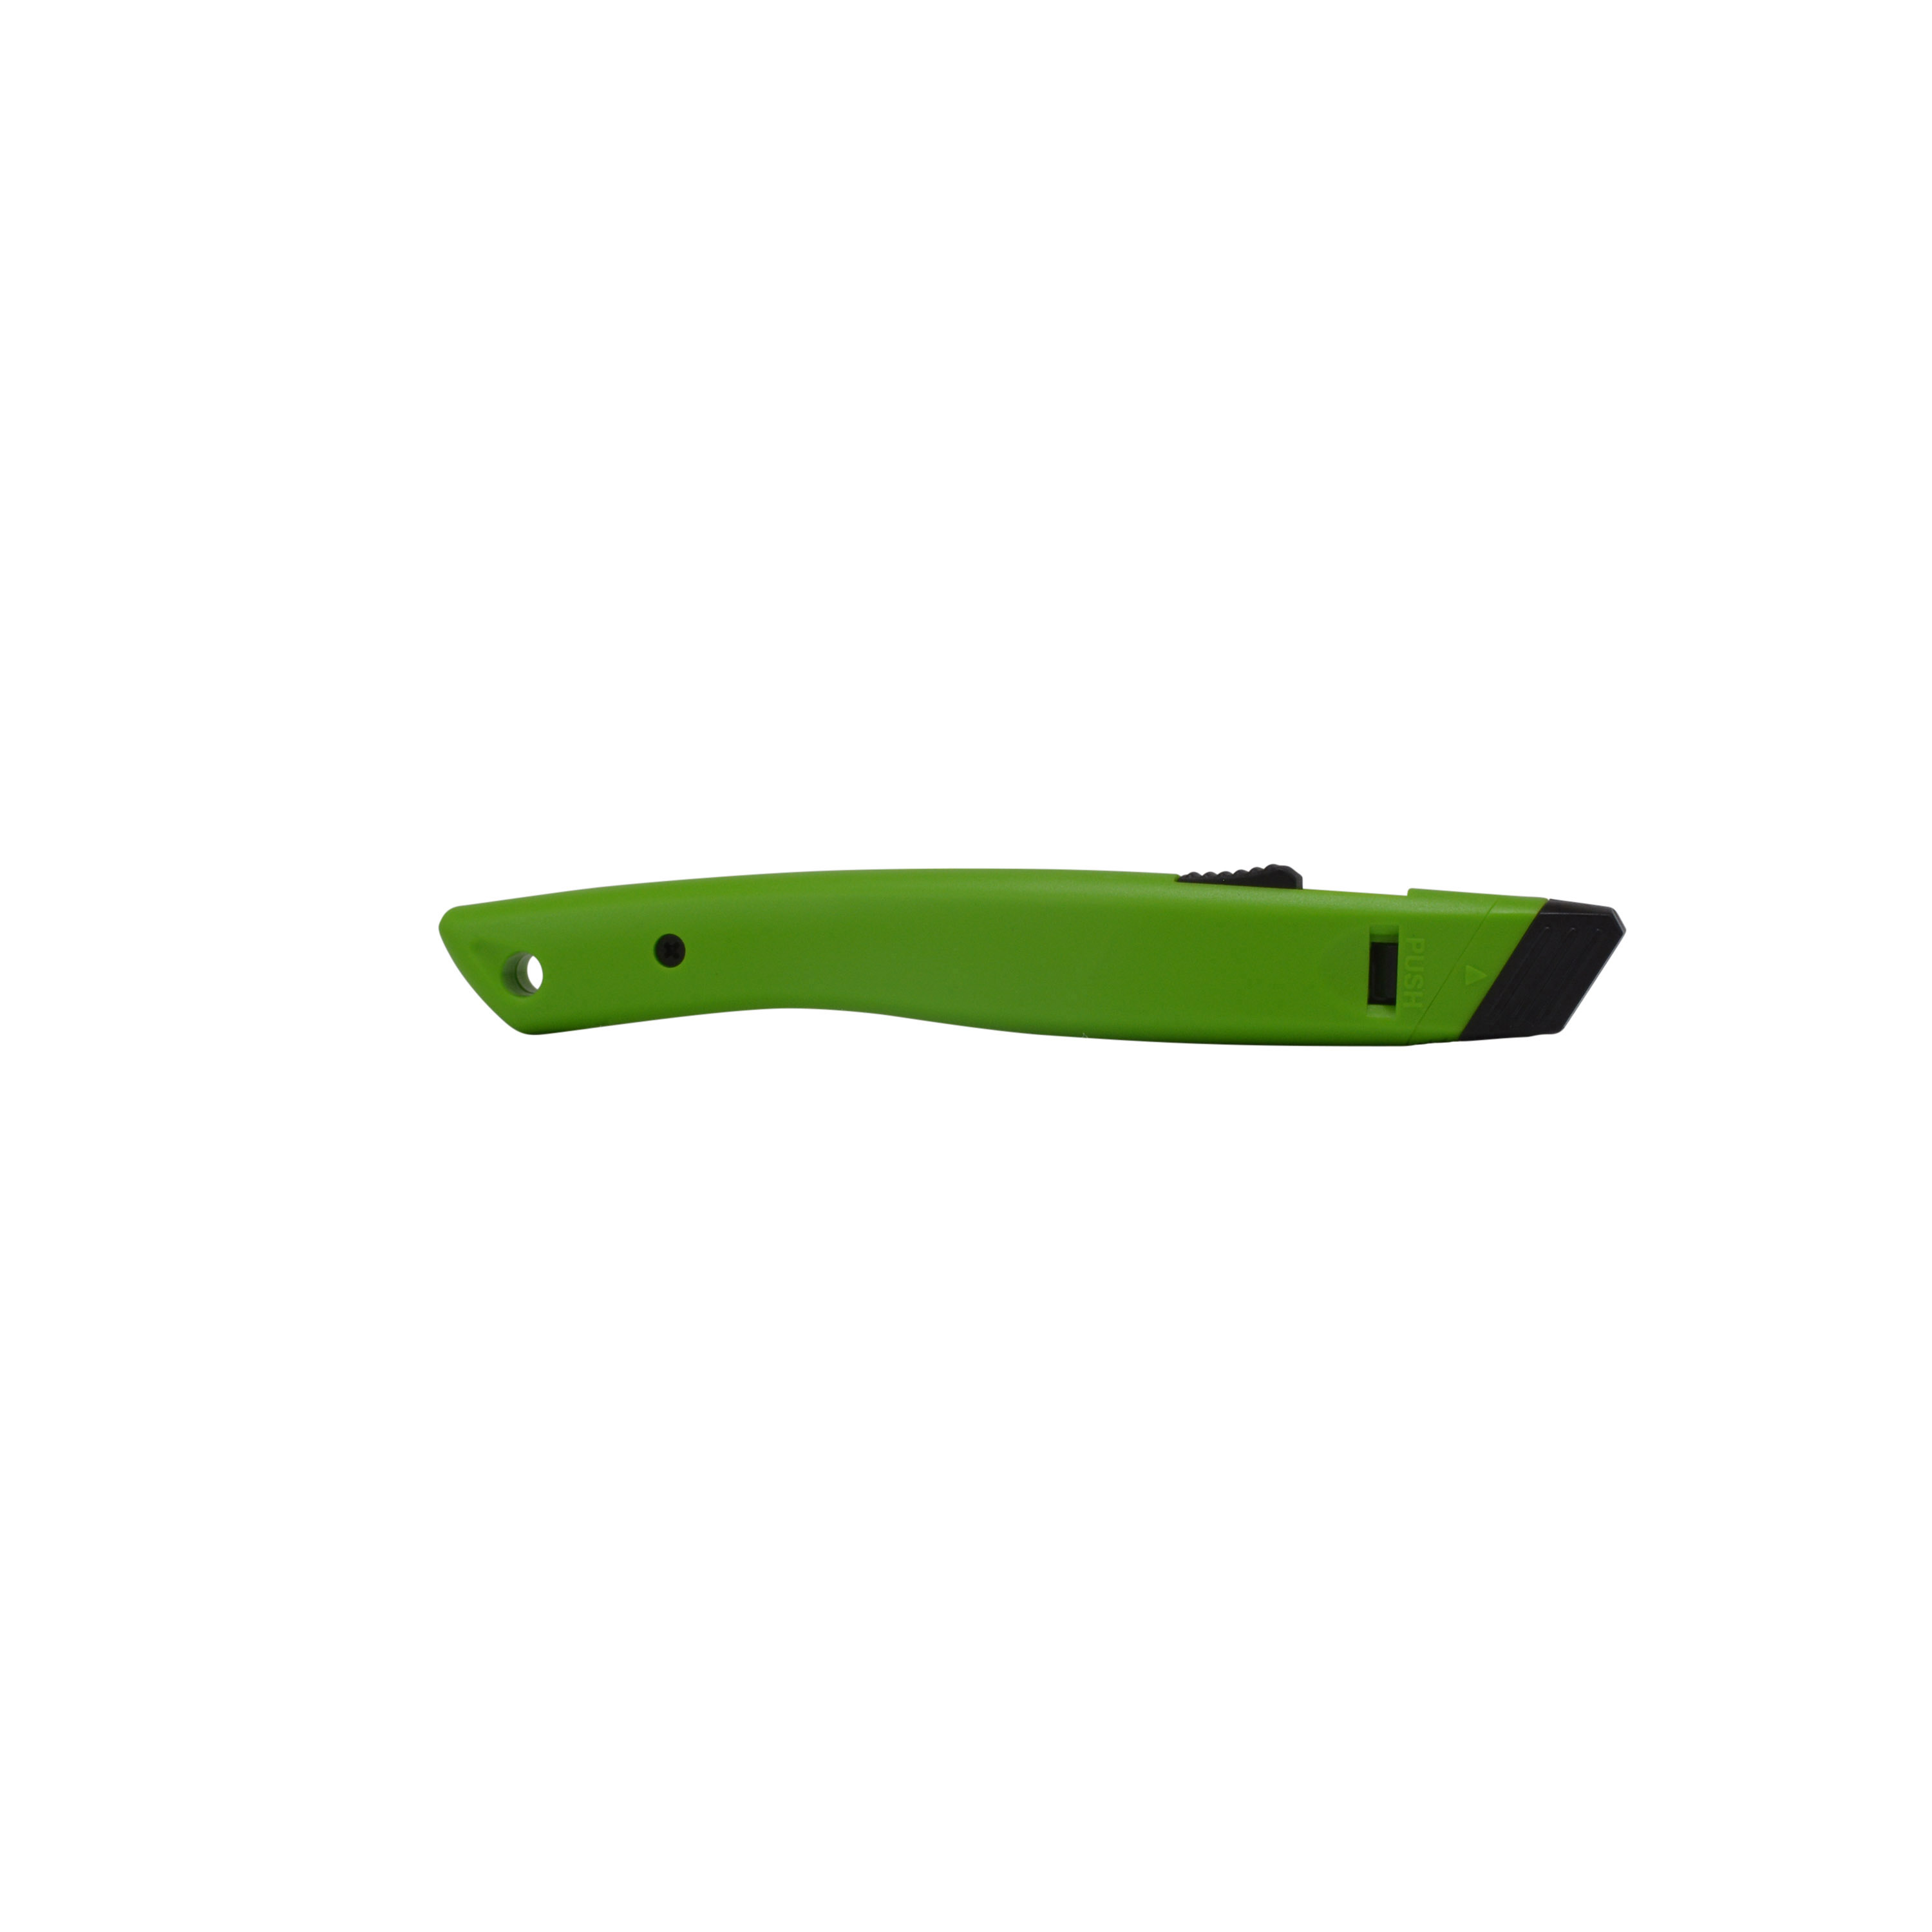 Westcott 17519 Full-Size Ceramic Blade Box Cutter, Retractable Utility Knife